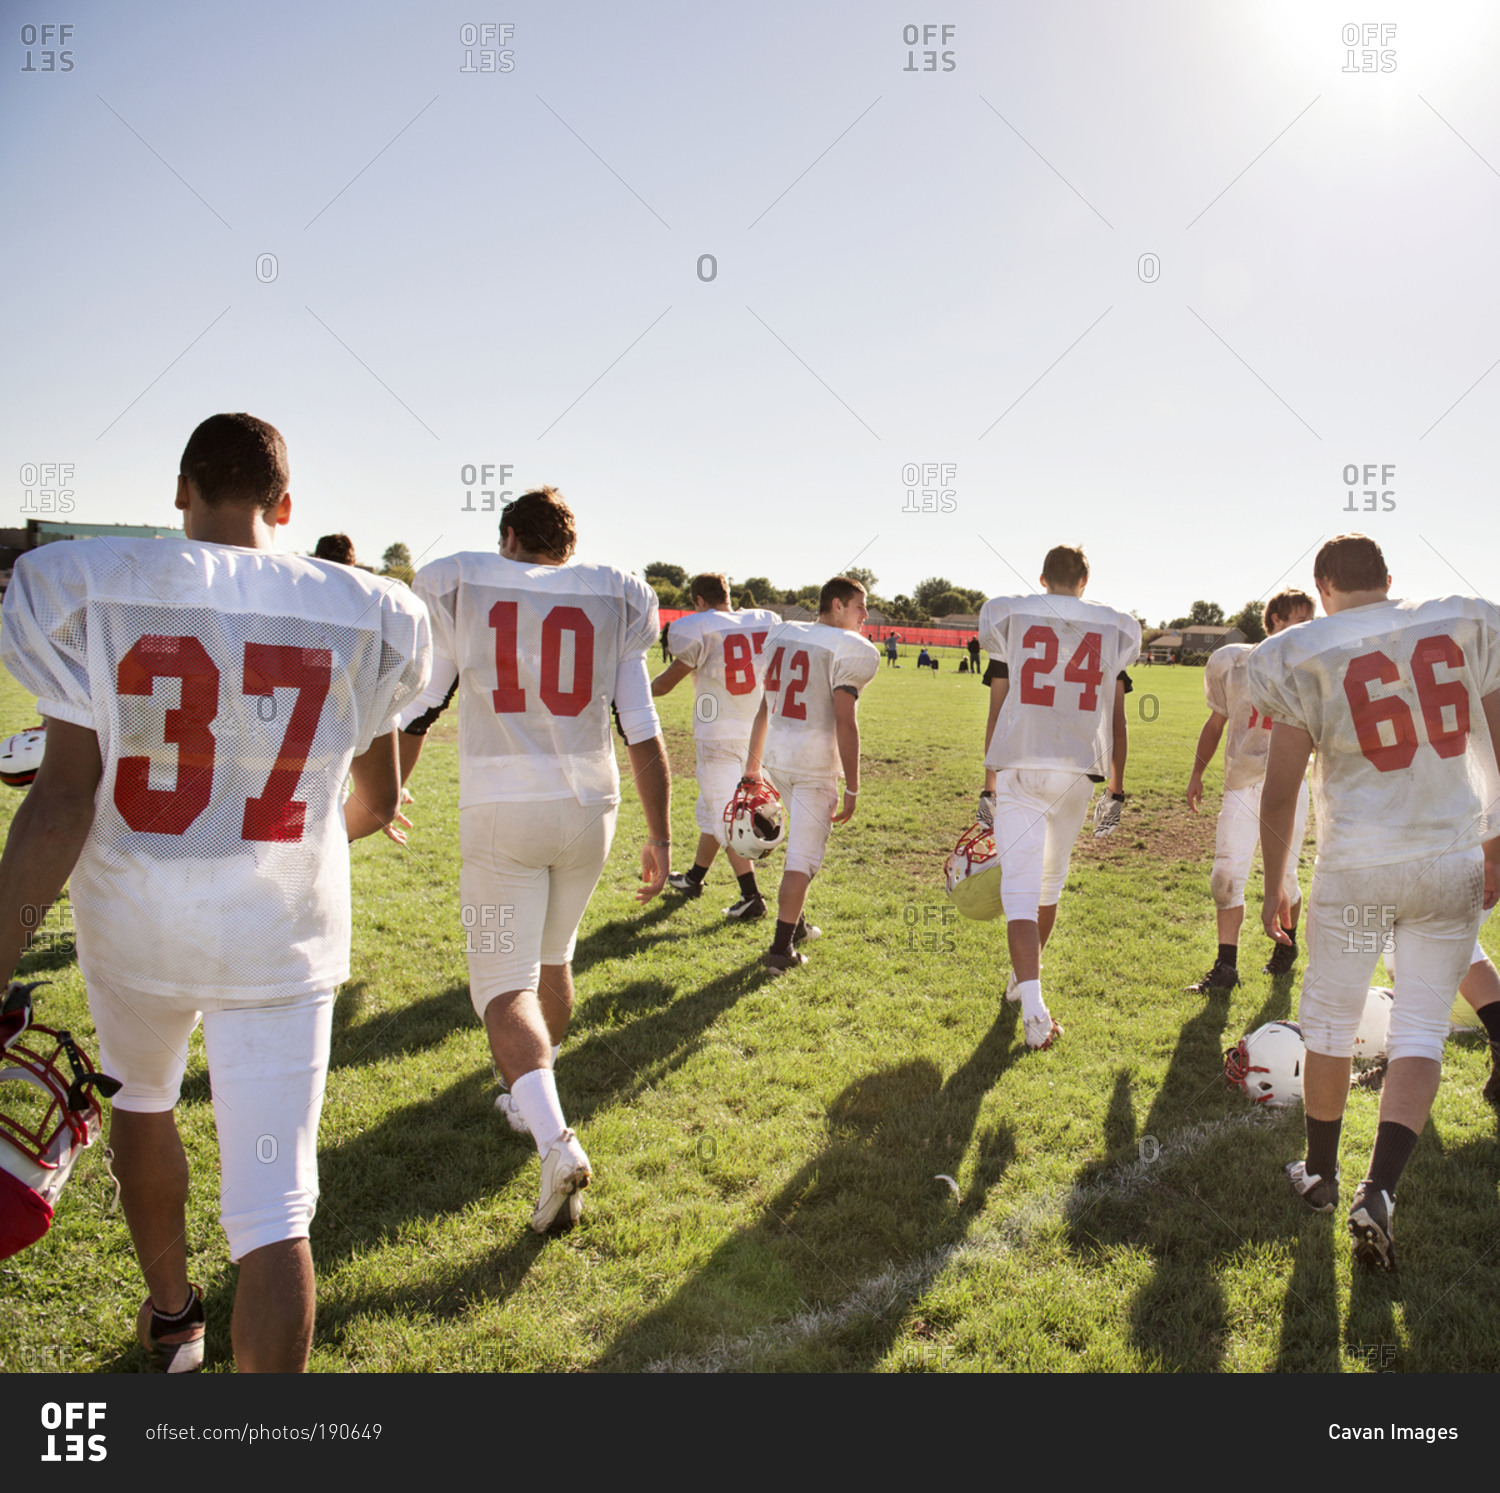 A high school football team walks onto the field